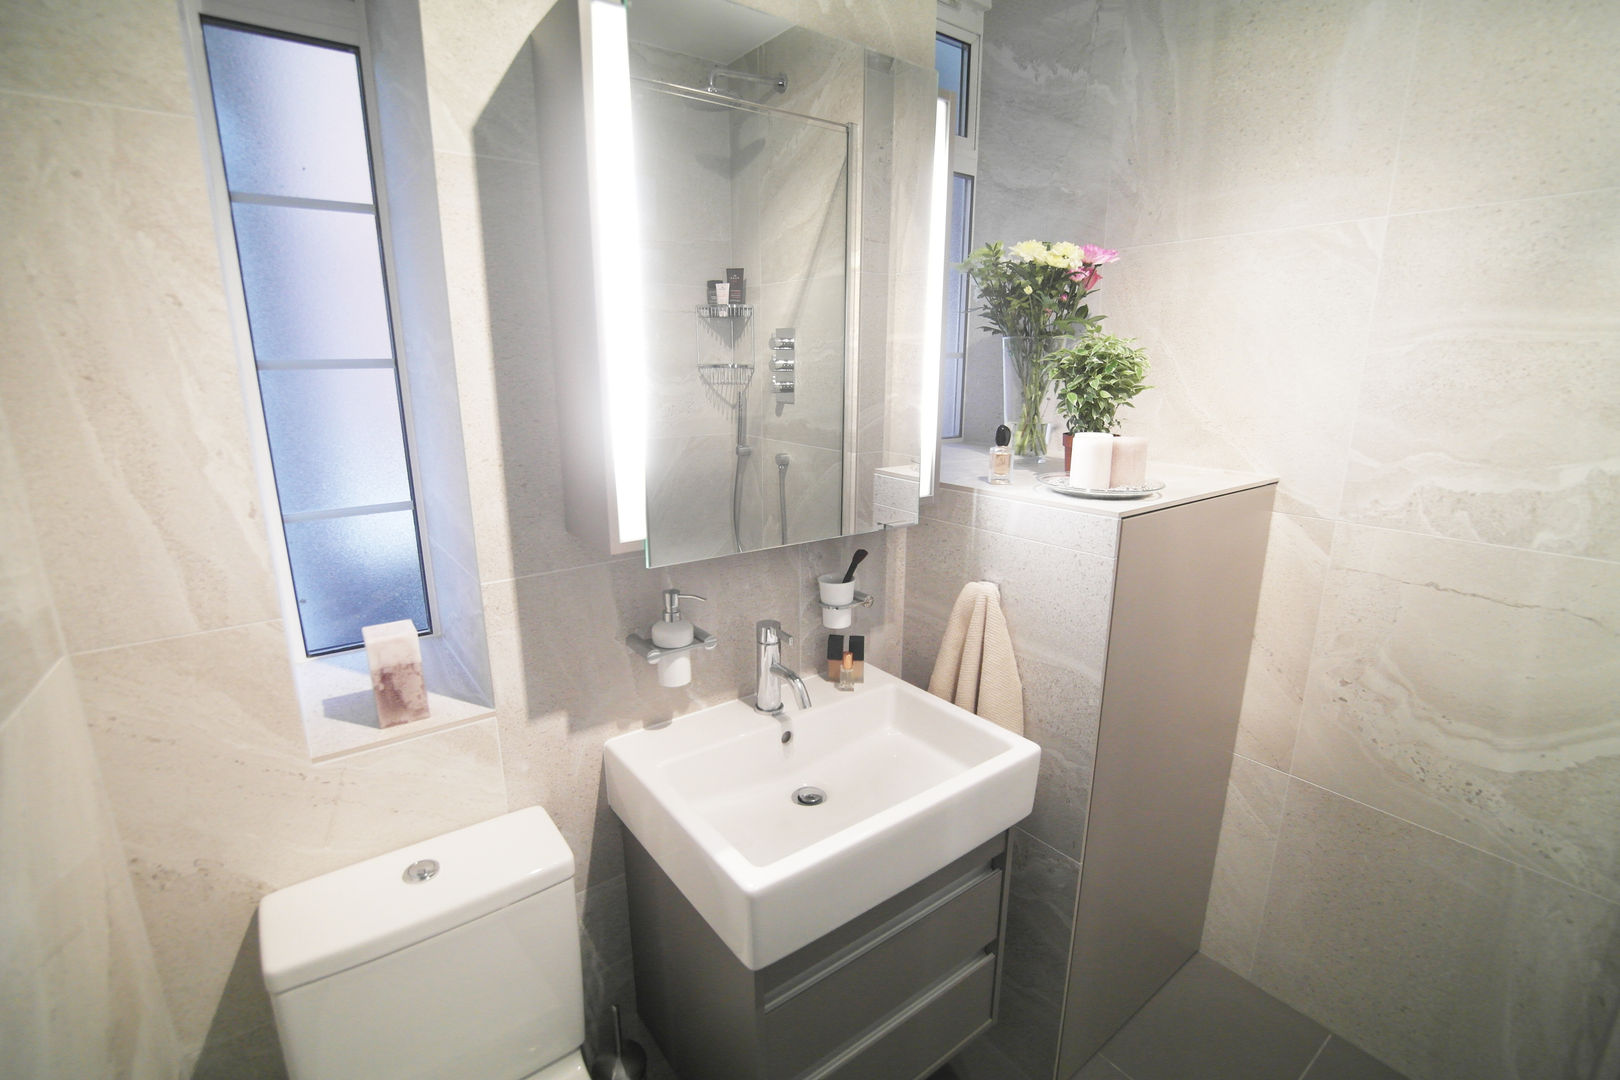 St John's Wood Patience Designs Studio Ltd Salle de bain moderne bathroom,interior,design